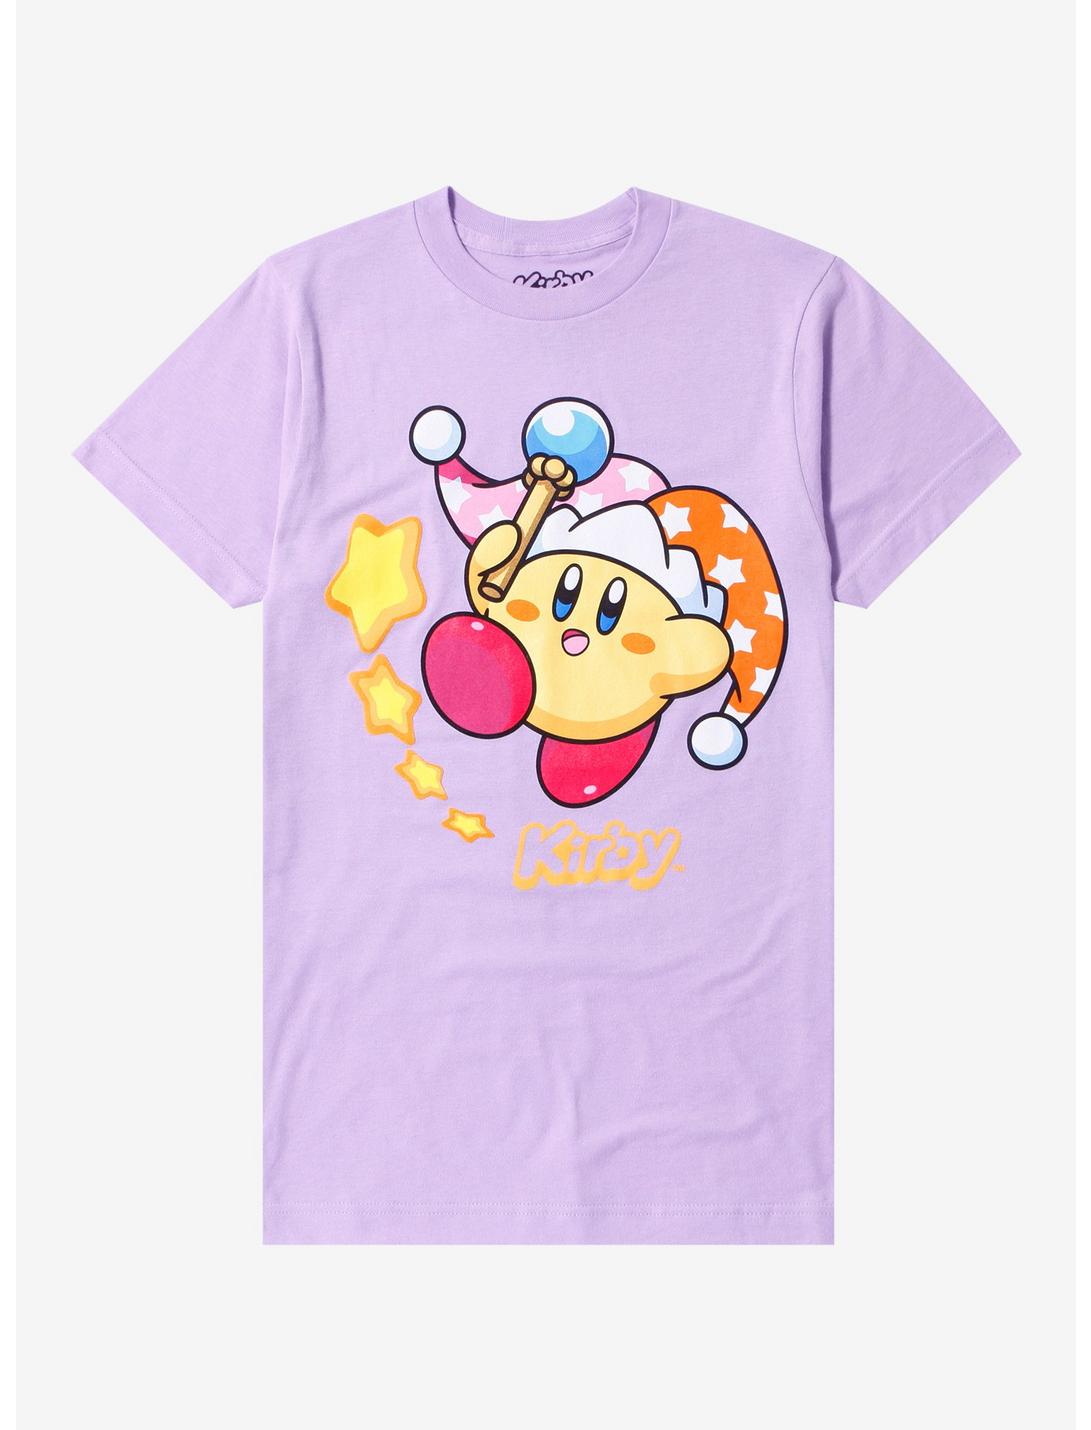 Kirby Beam Ability Boyfriend Fit Girls T-Shirt, MULTI, hi-res